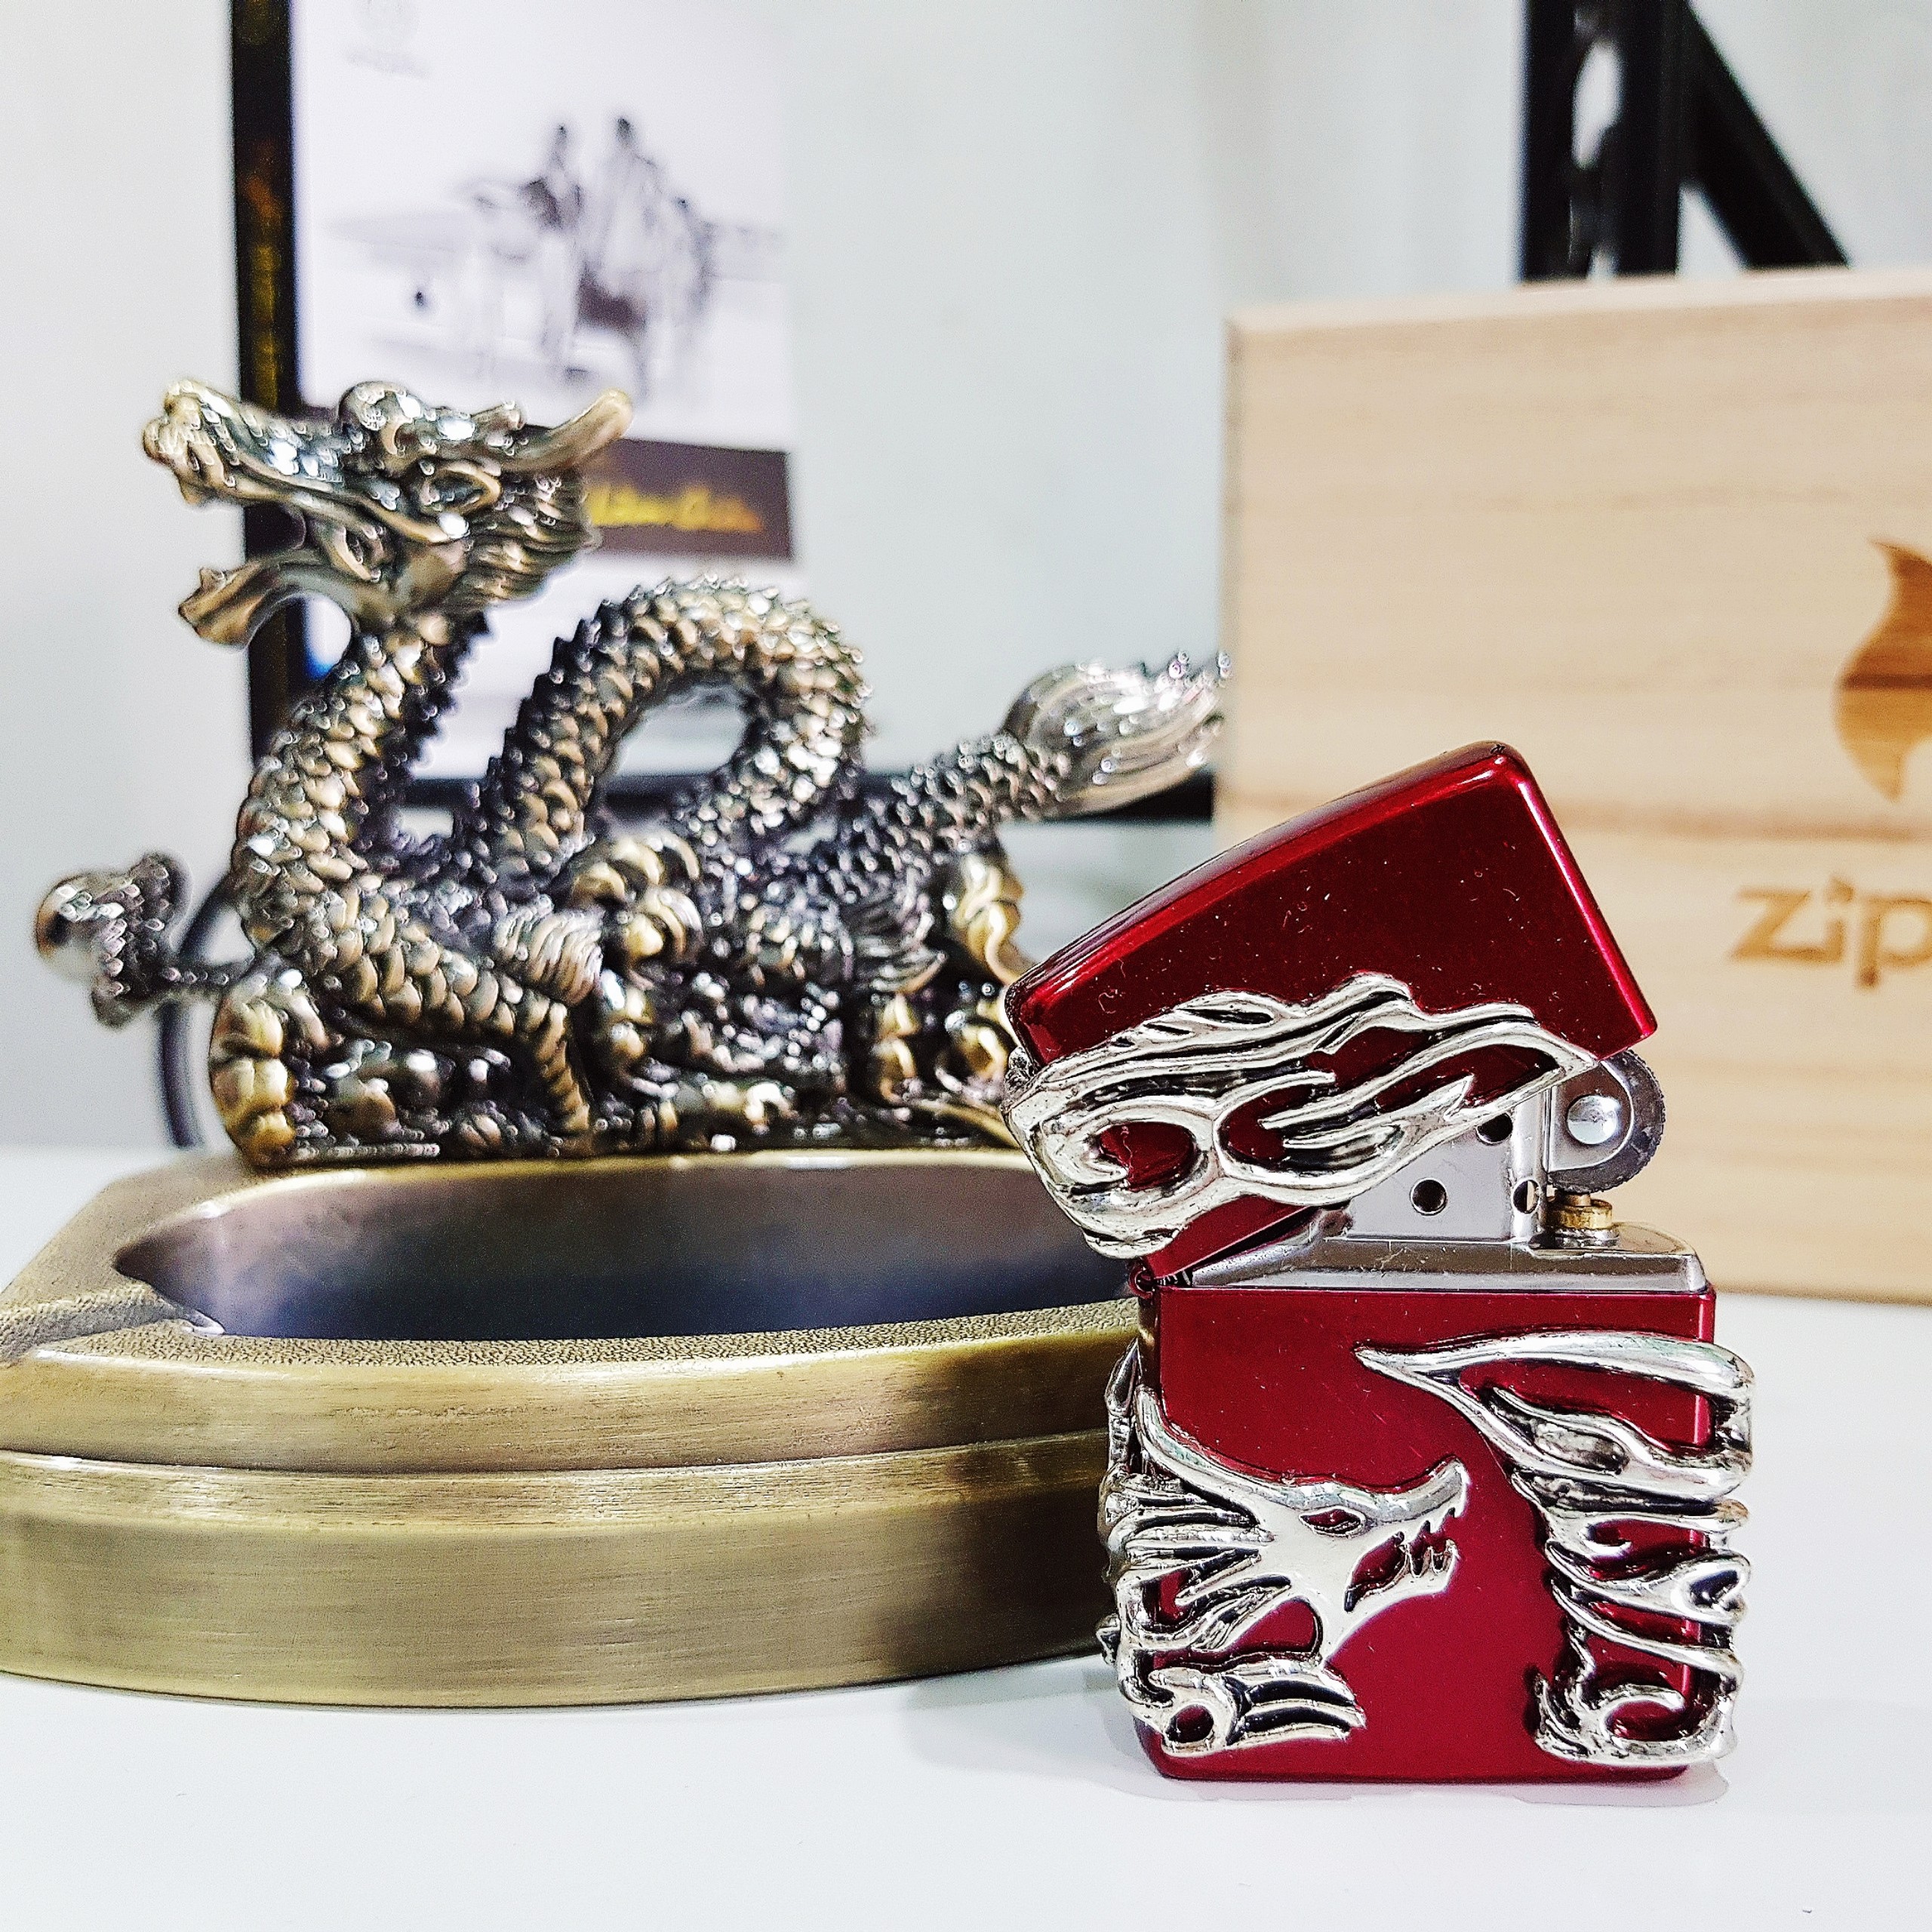 Bật lửa Zippo 252BL032 Set Rồng nổi 3D full 4 mặt zip + 1 gạt tàn kiêm bật lửa để bàn